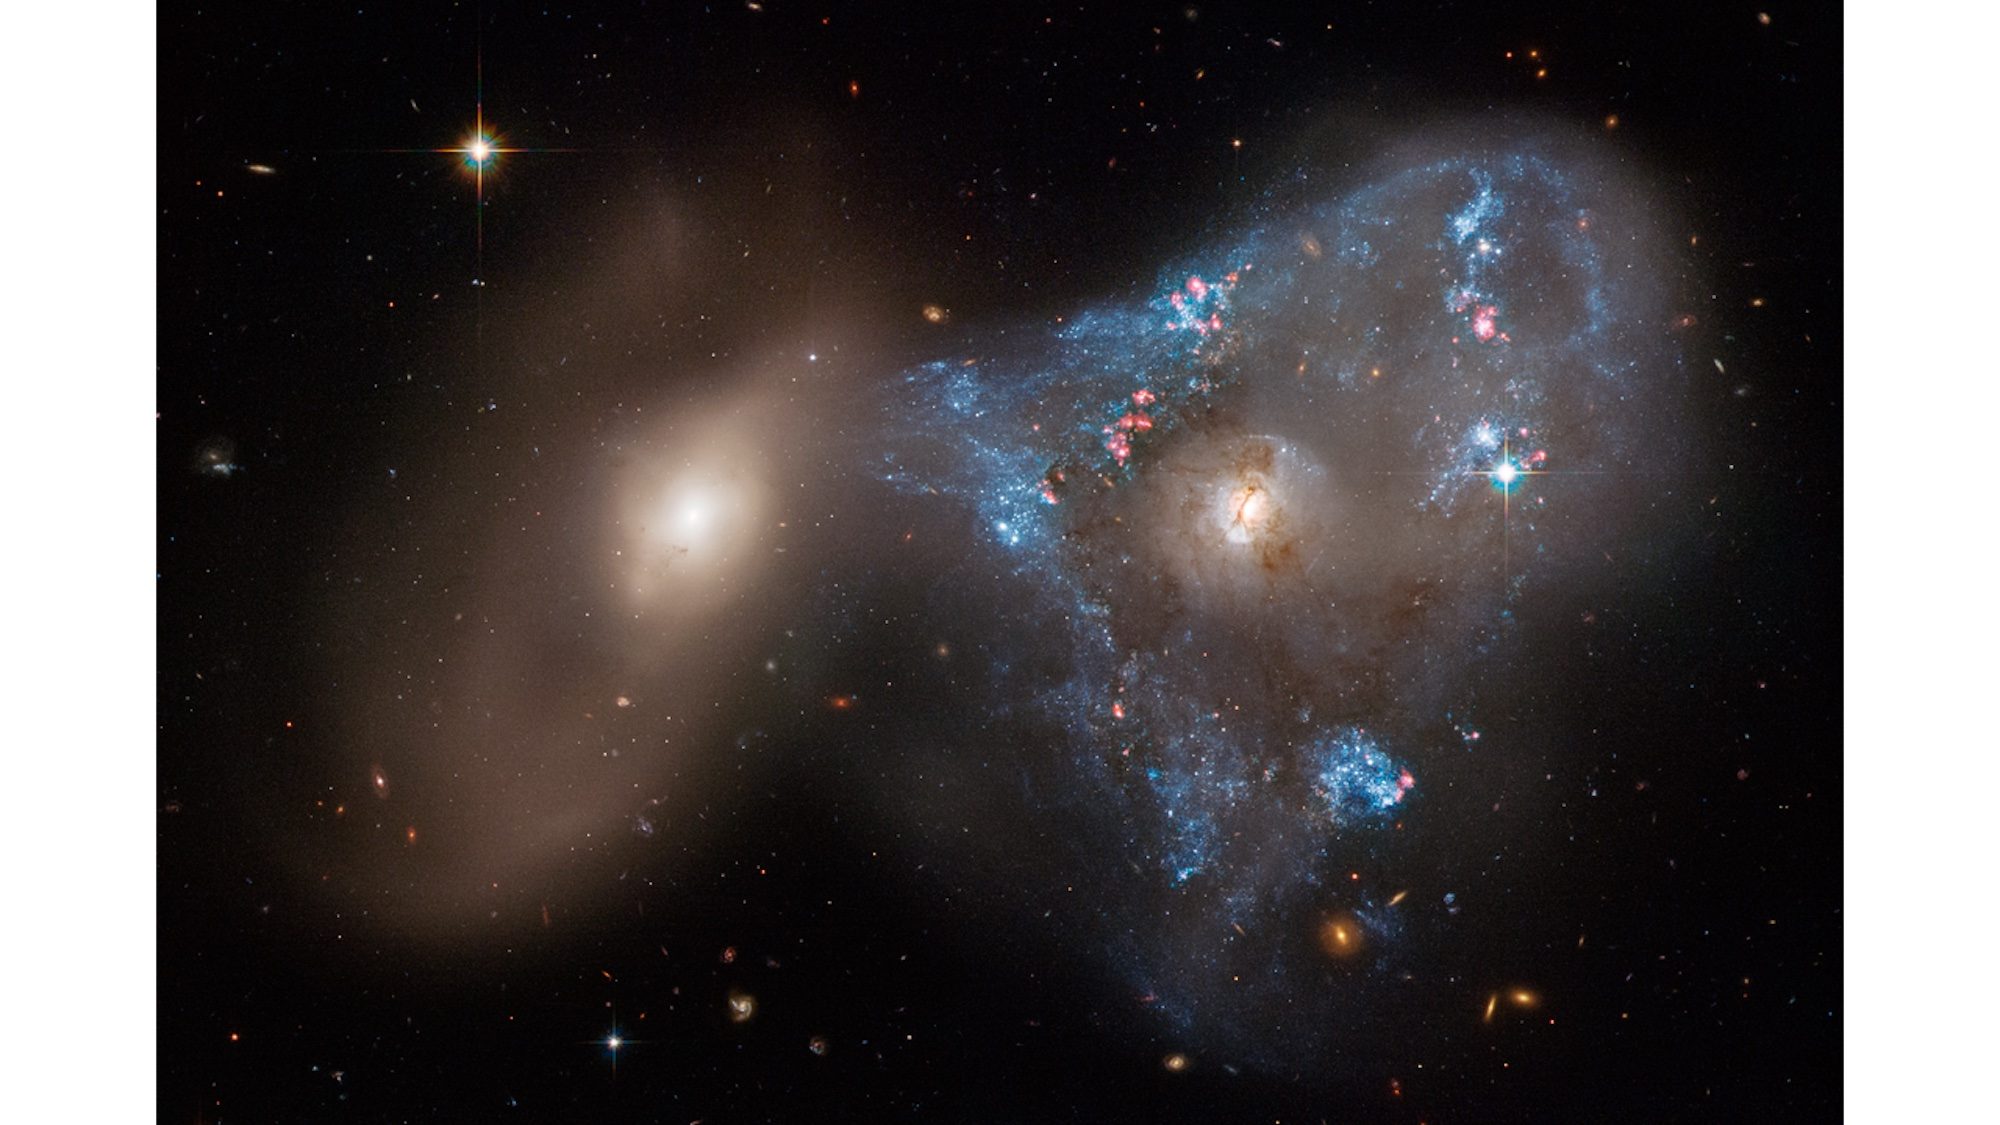 Les deux galaxies nommées Arp 143 © NASA, ESA, STScI, Julianne Dalcanton, Flatiron Inst. / UWashington